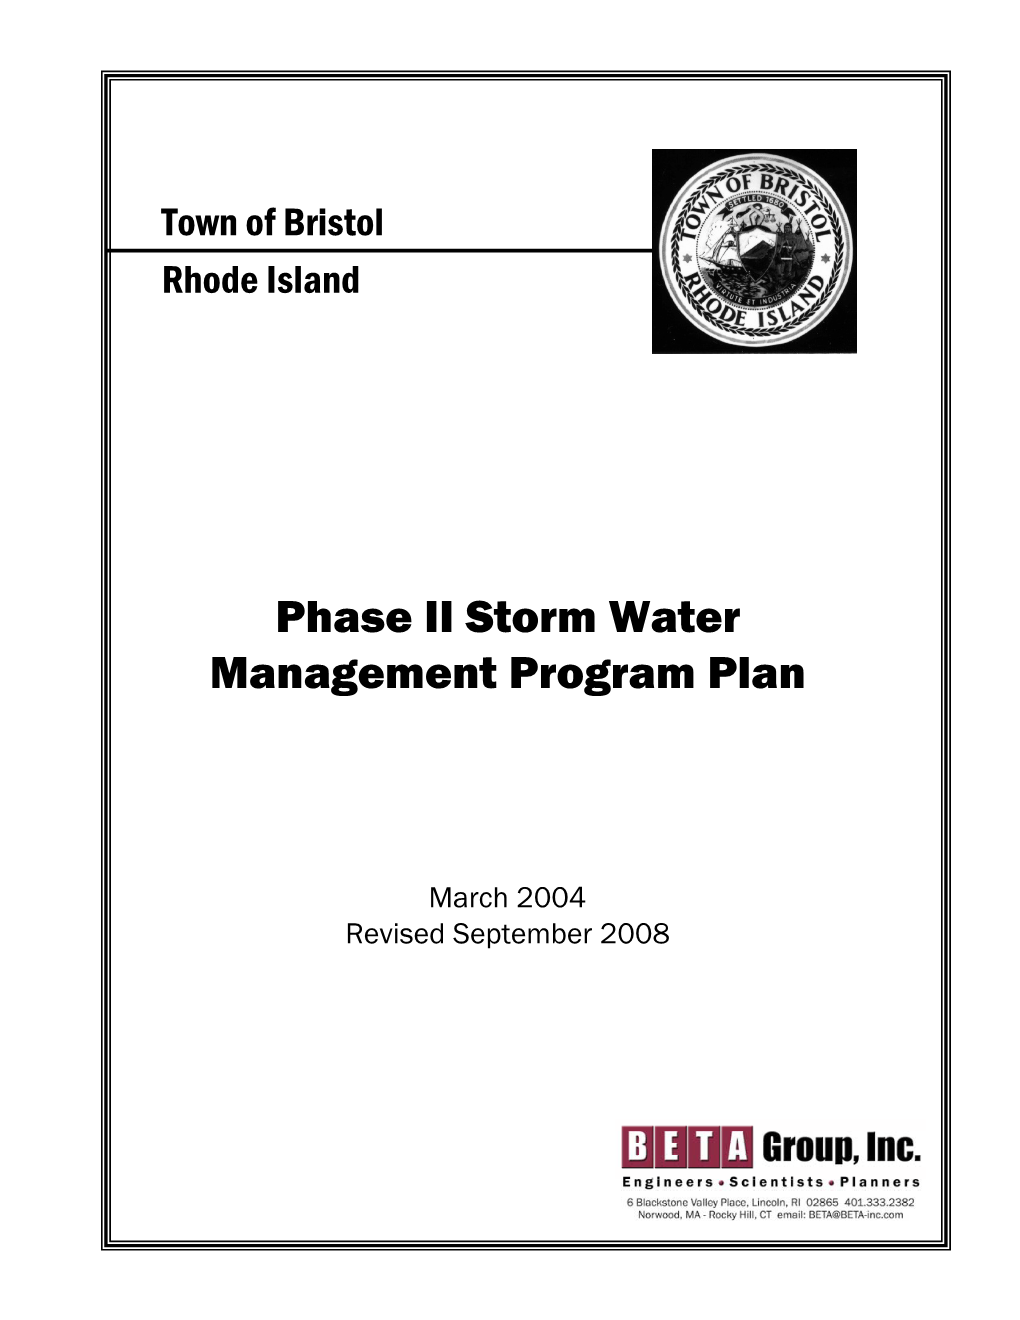 Phase II Storm Water Management Program Plan